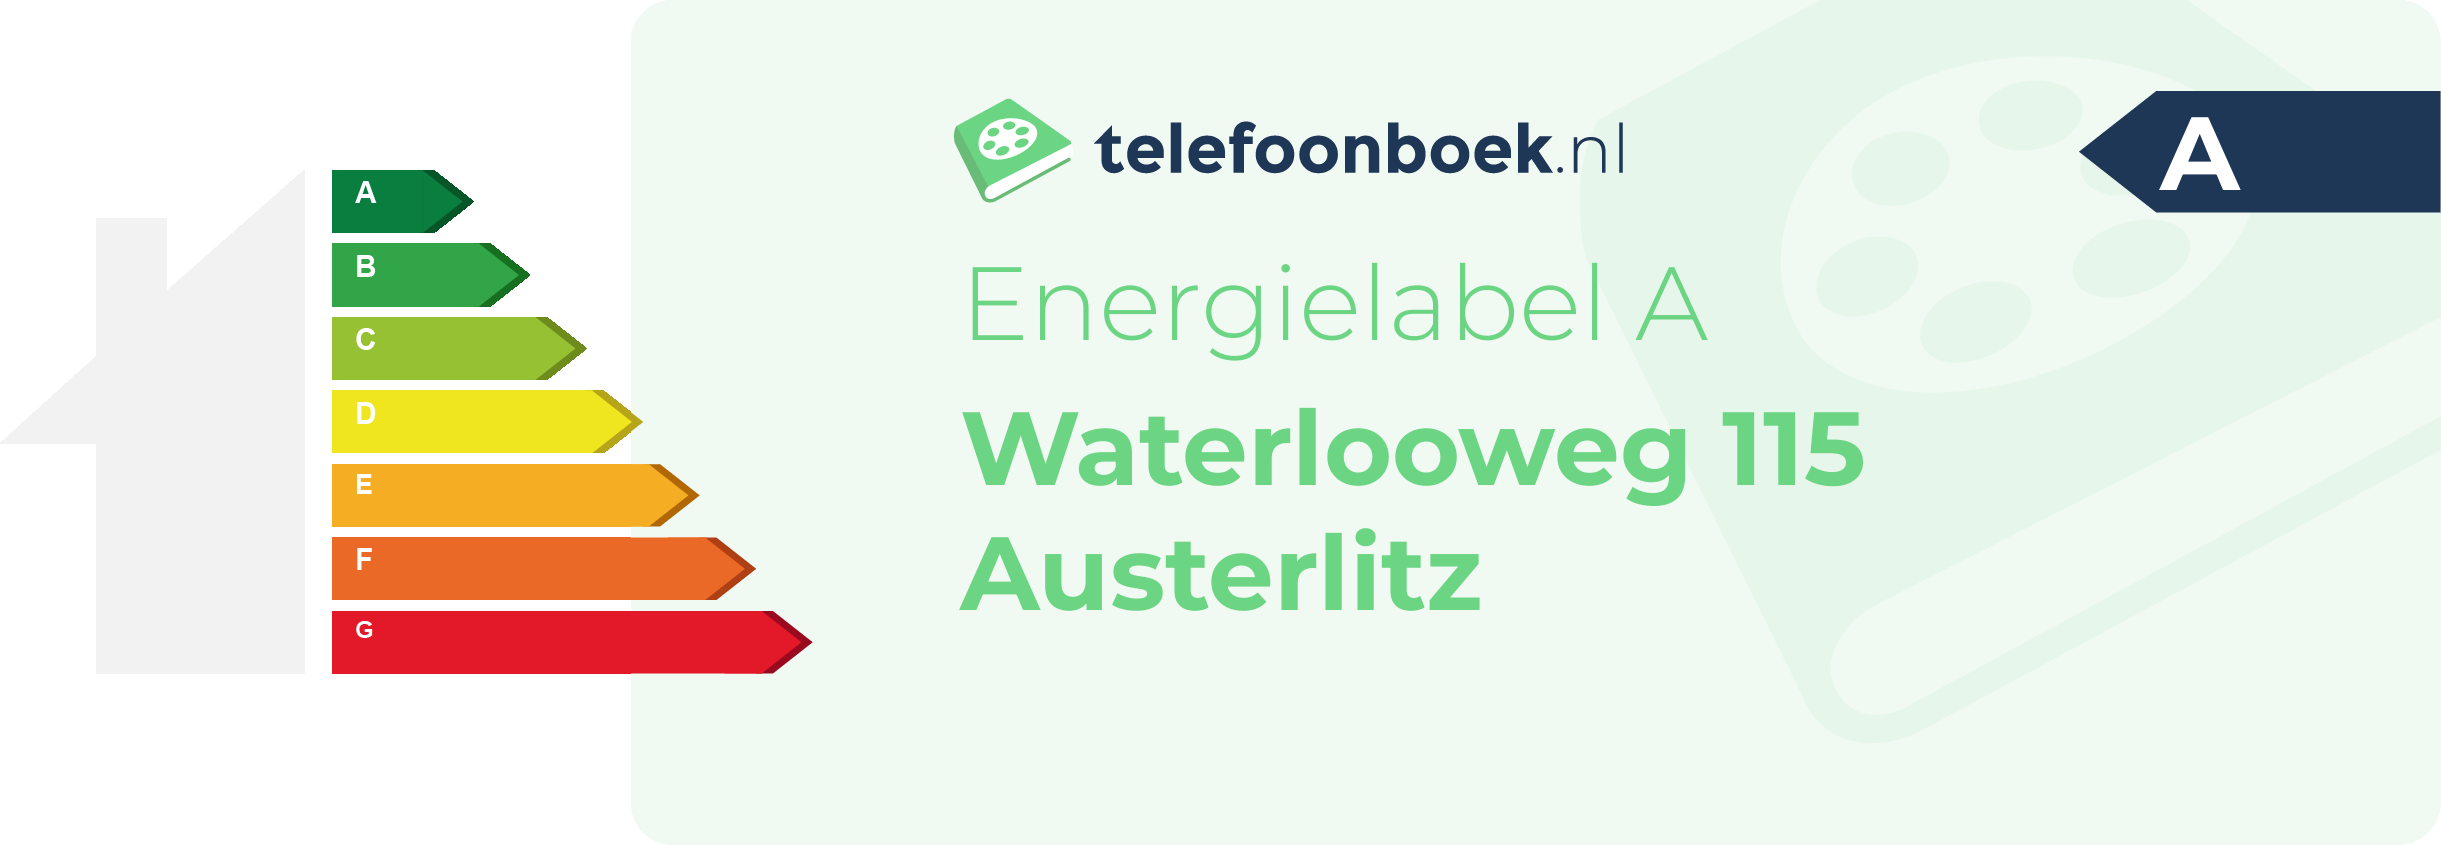 Energielabel Waterlooweg 115 Austerlitz